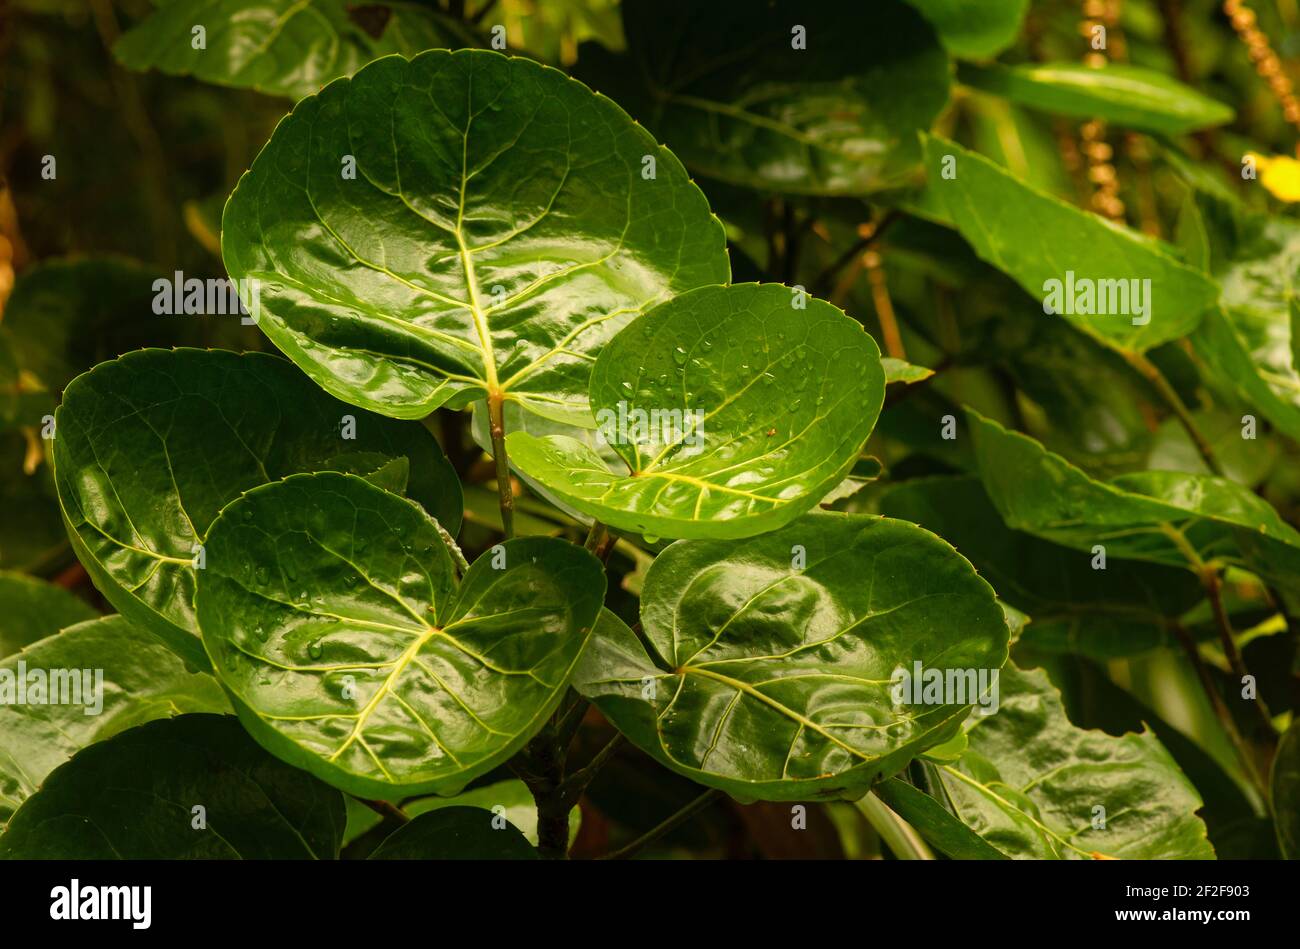 A plum aralia leaf (Polyscias scutellaria), a popular garden ornamental and medicinal plant in Indonesia Stock Photo